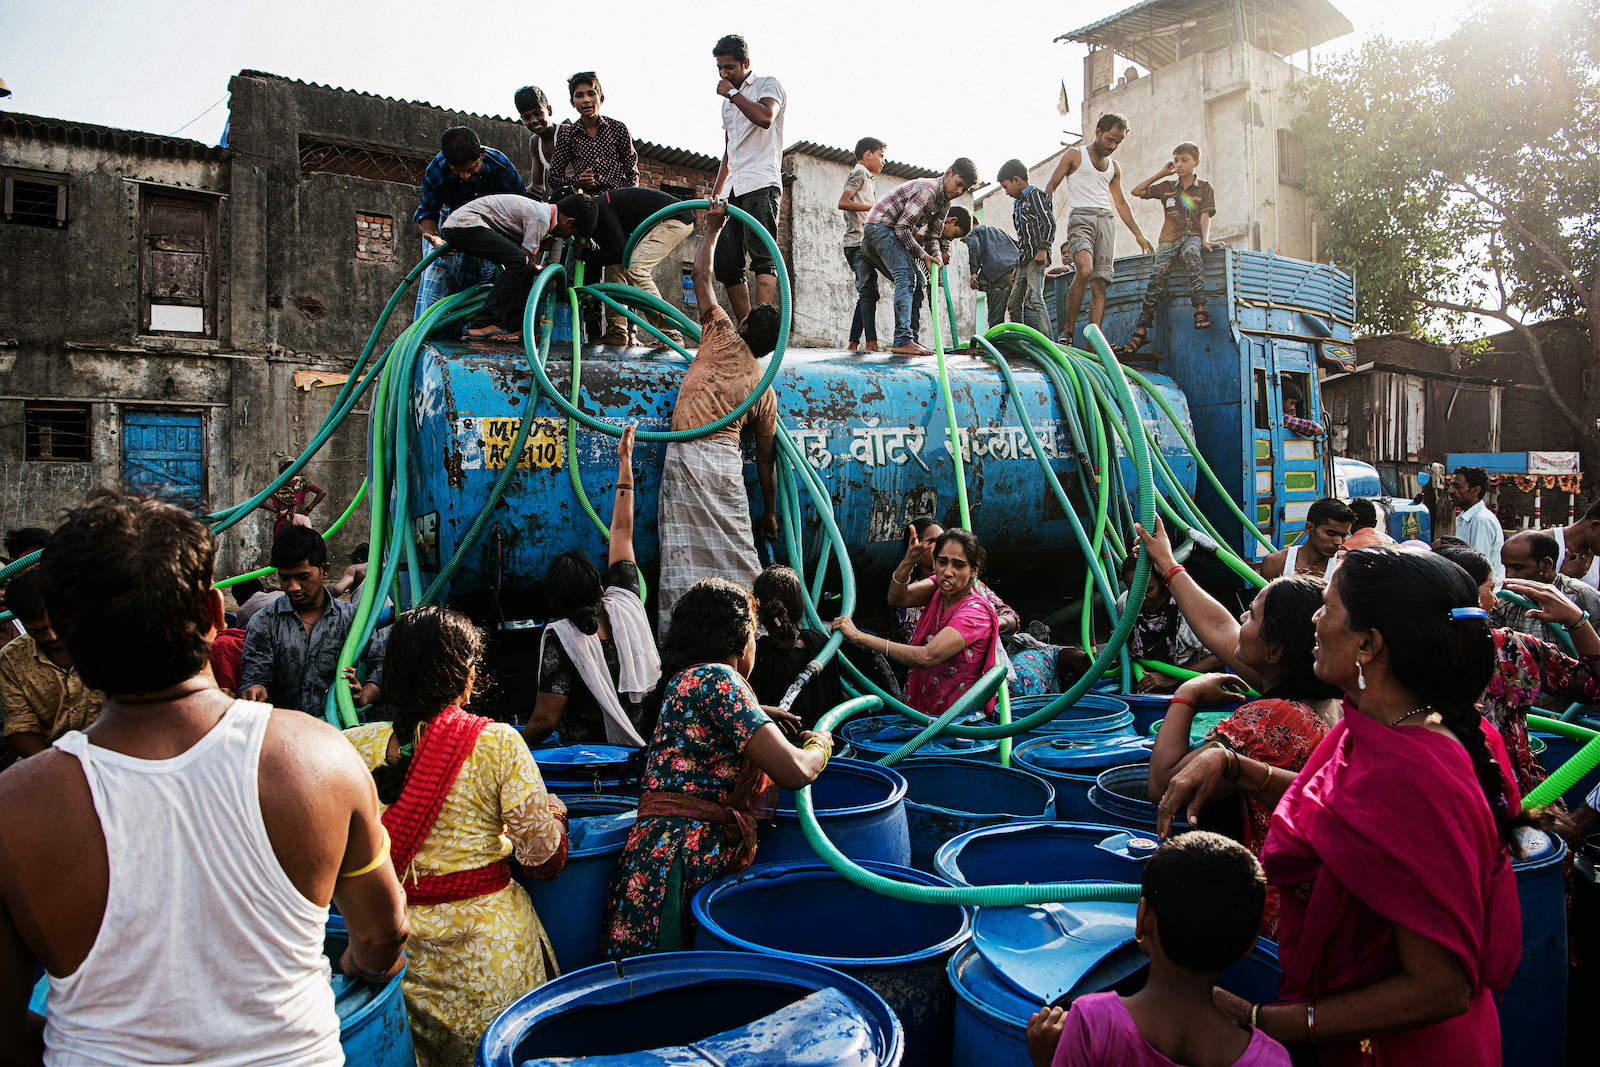 Villagers in Bhiwandi, India climb a municipal water tanker